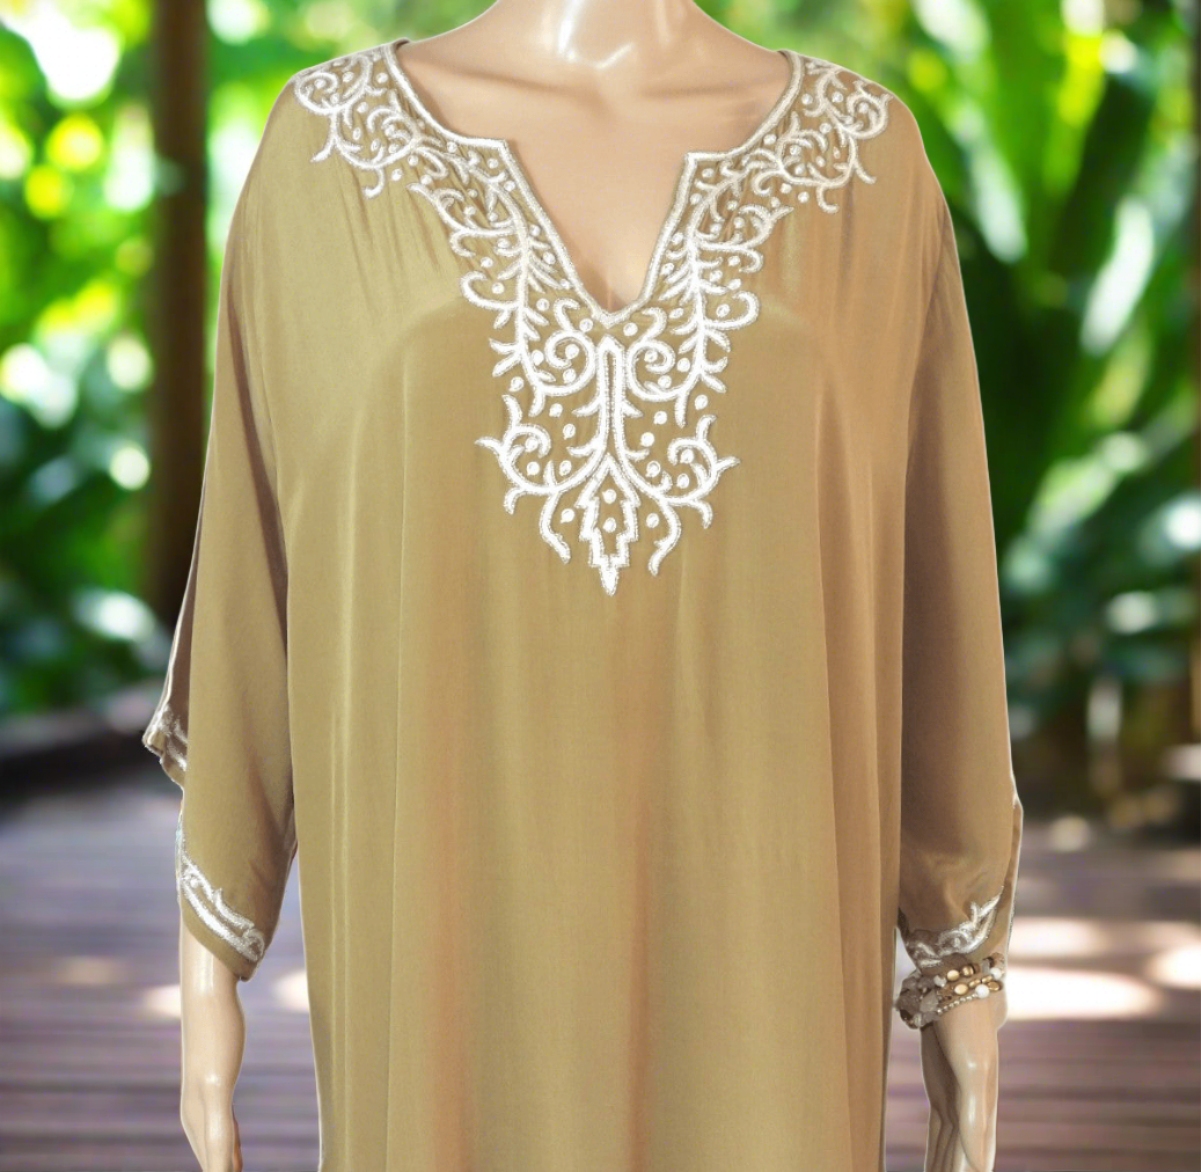 Olive Short Silk Kaftan Dress - by Fashion Spectrum - Kaftans that Bling